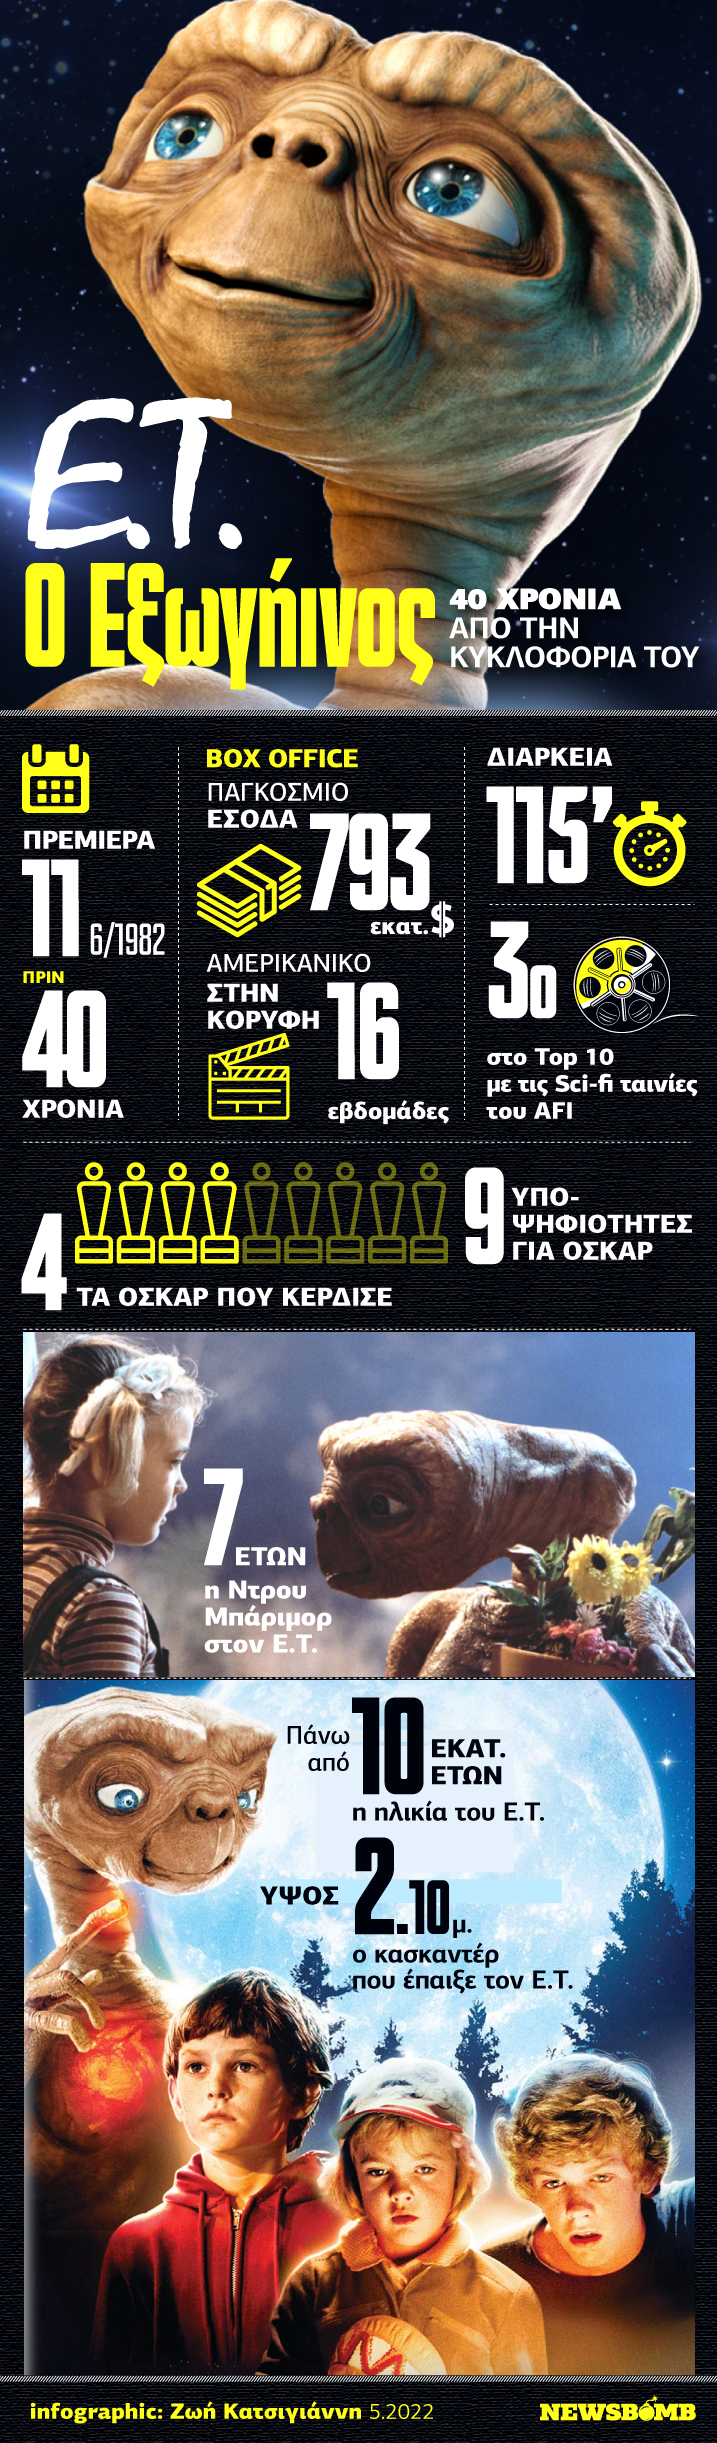 E.T. Infographic